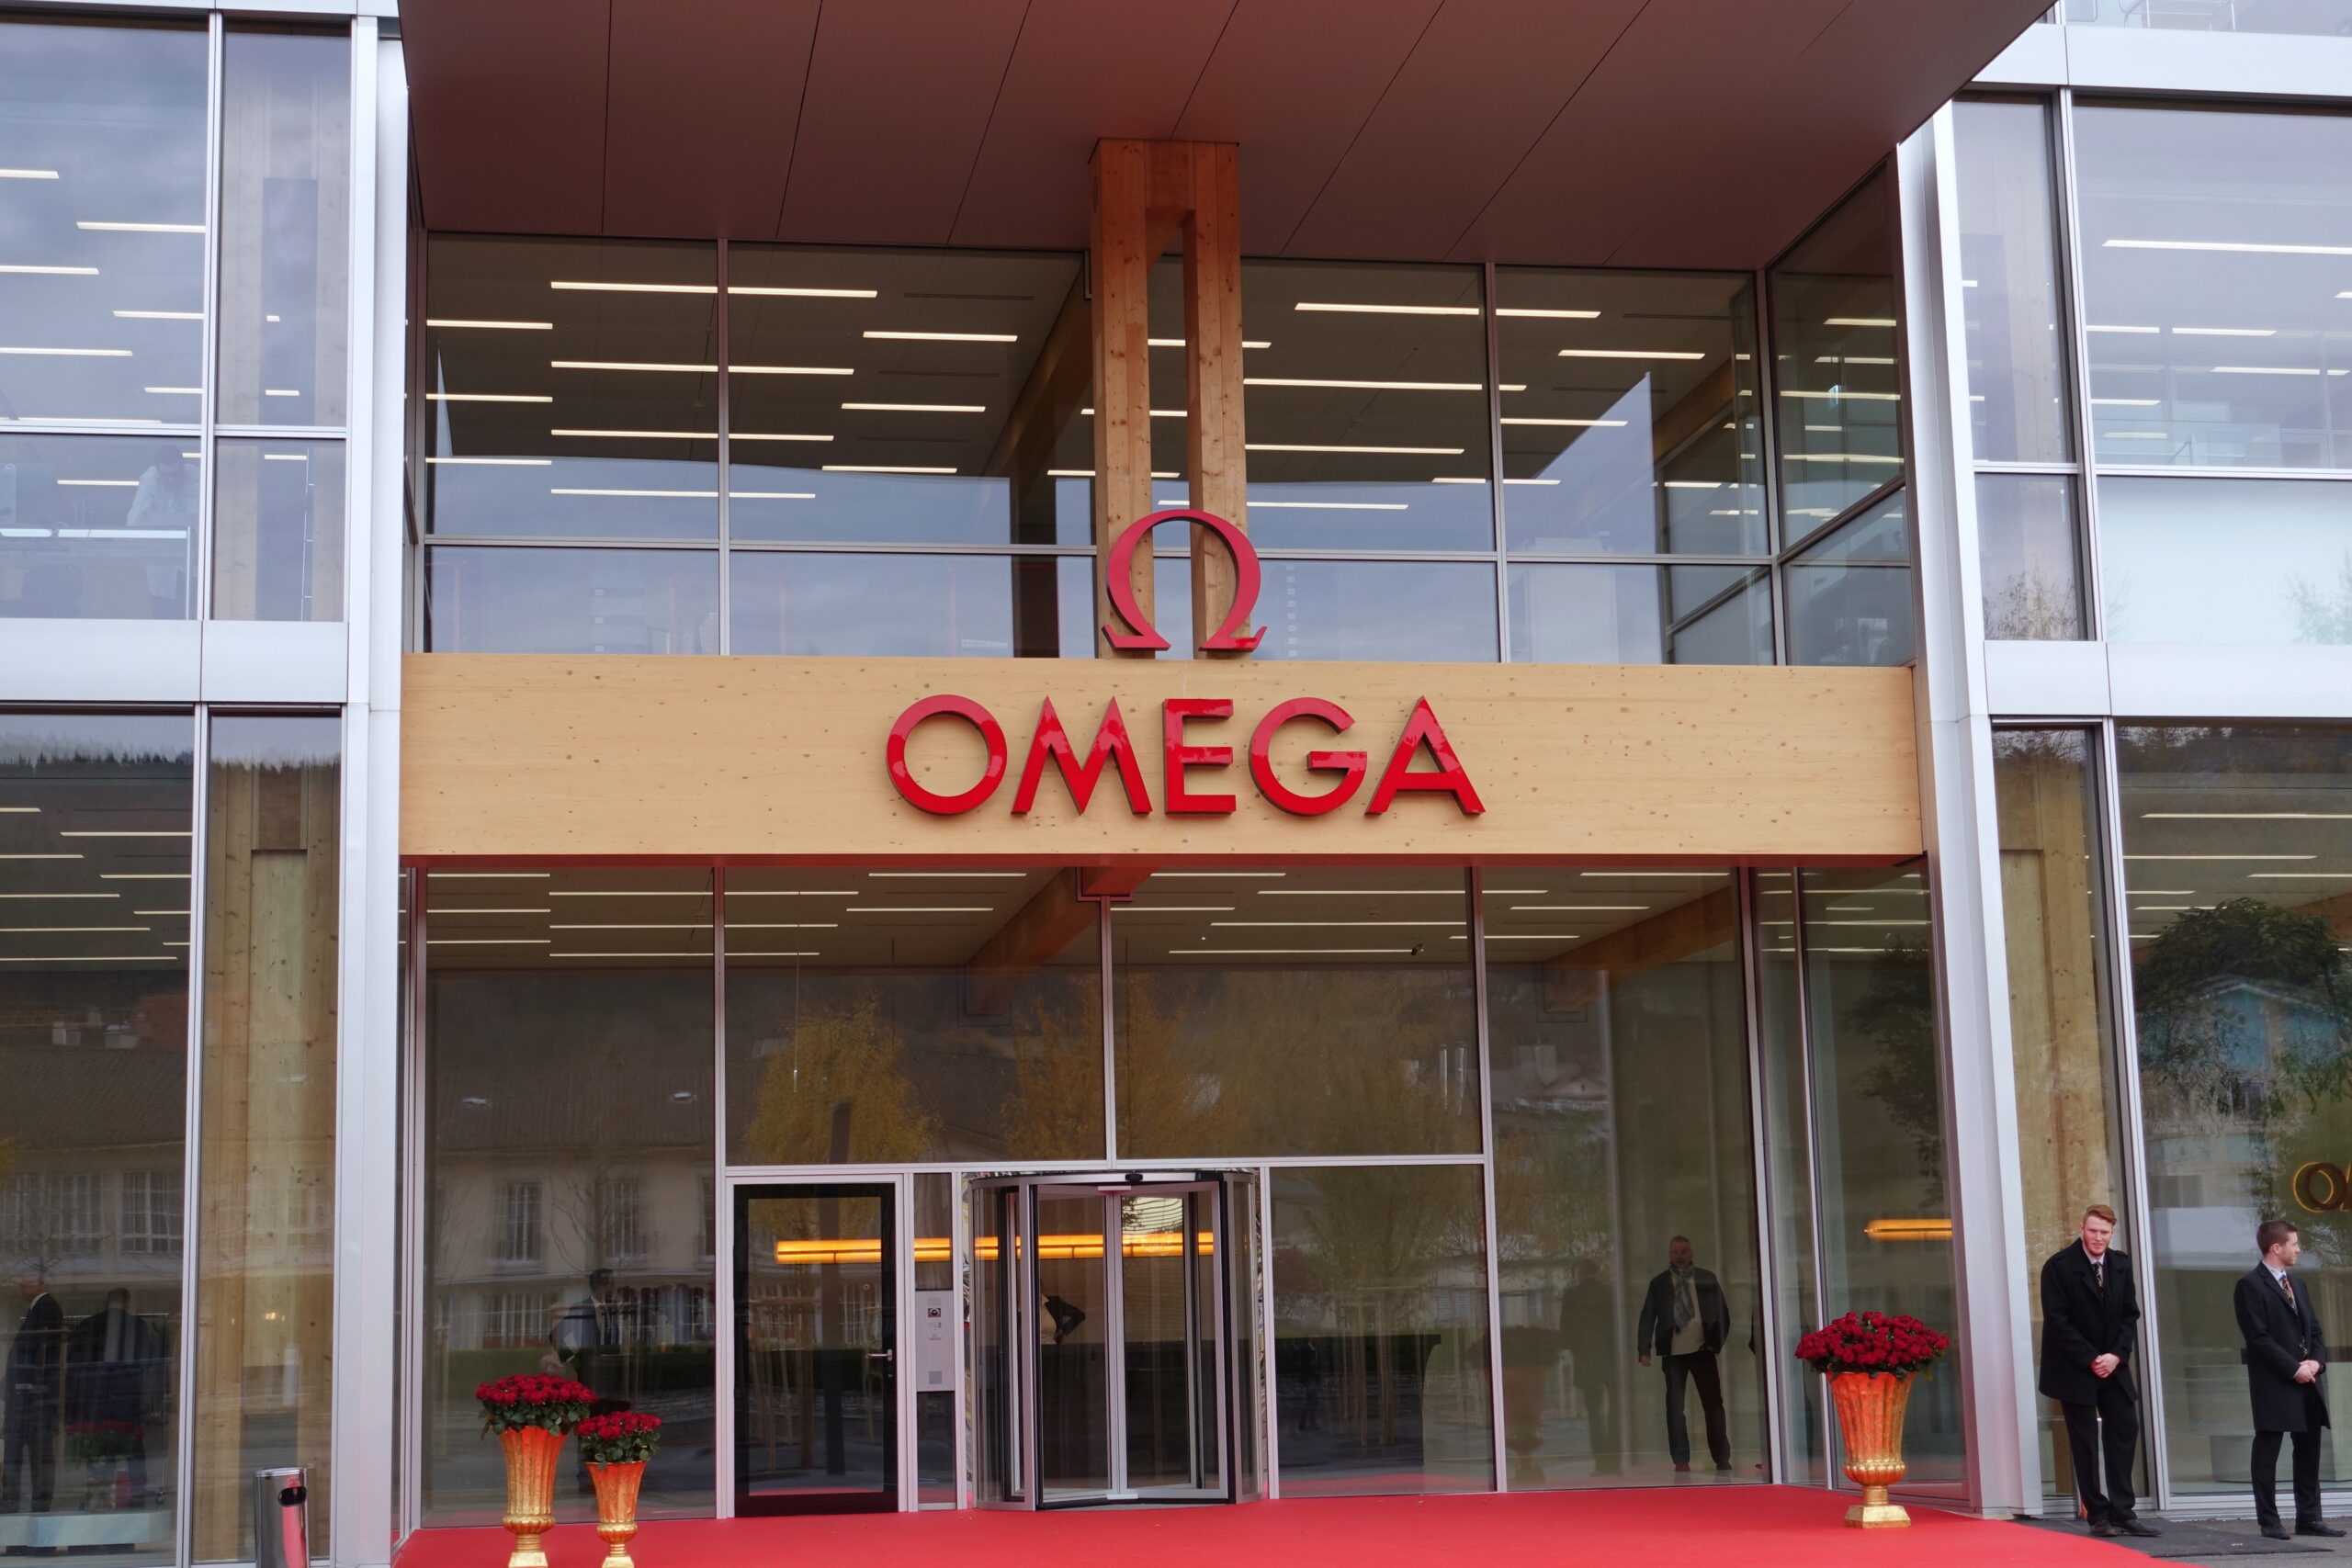 Omega’s newest factory in Biel / Switzerland